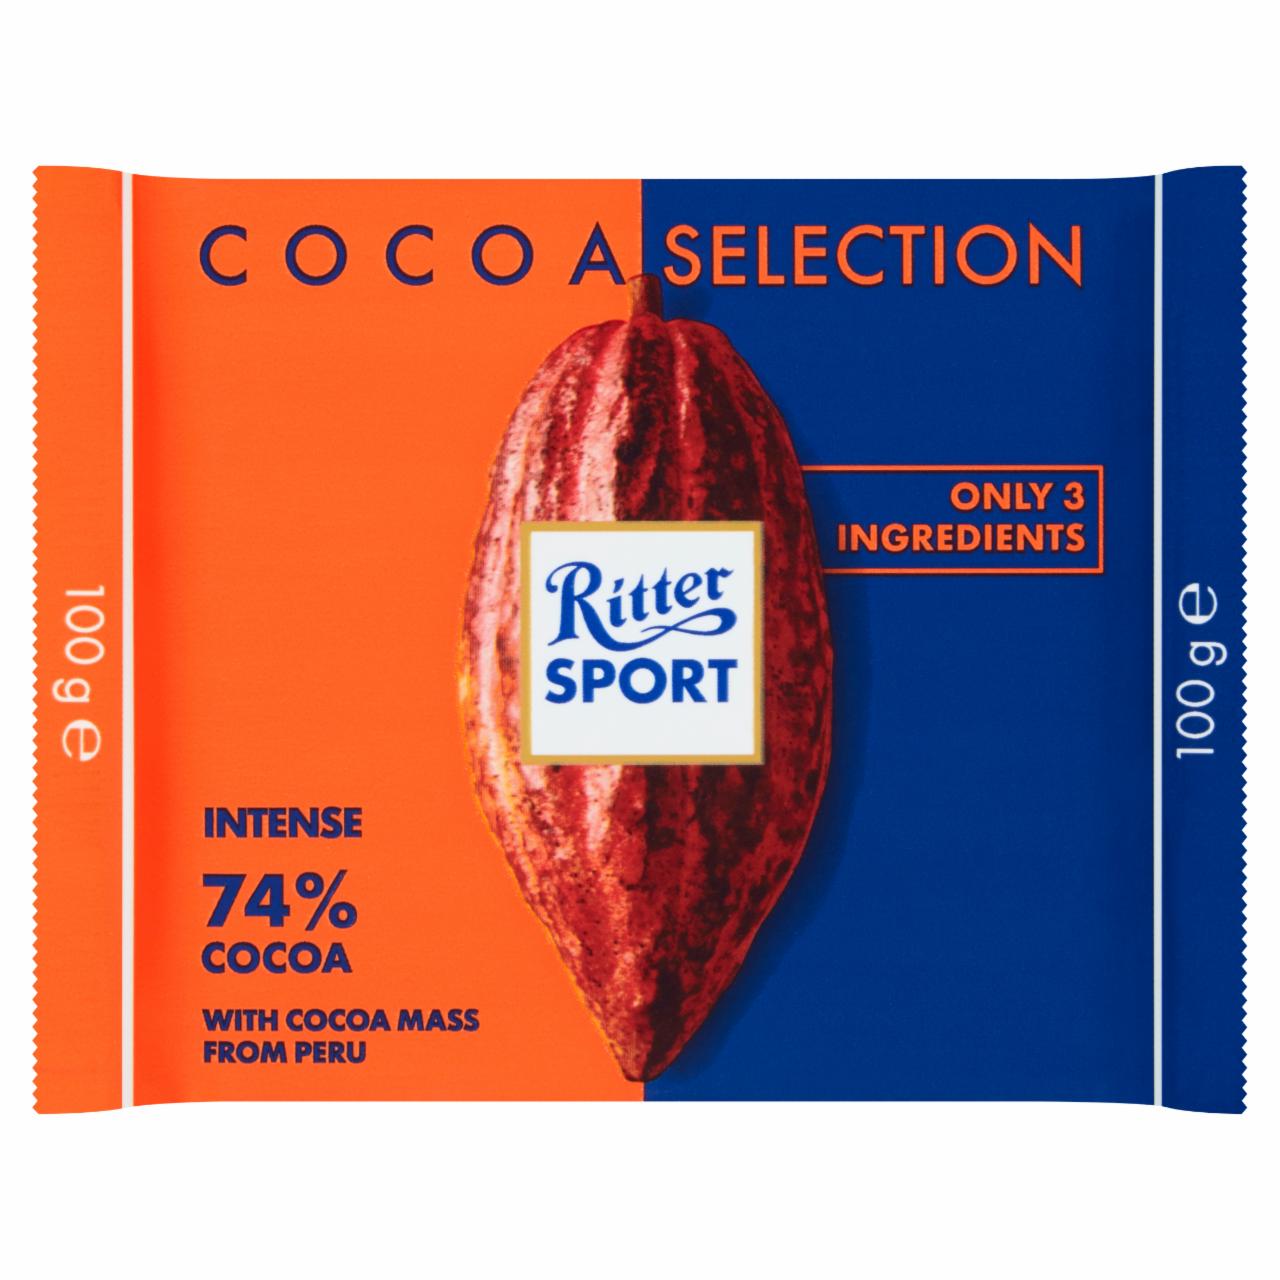 Zdjęcia - Ritter Sport 74% Cocoa Czekolada gorzka 100 g